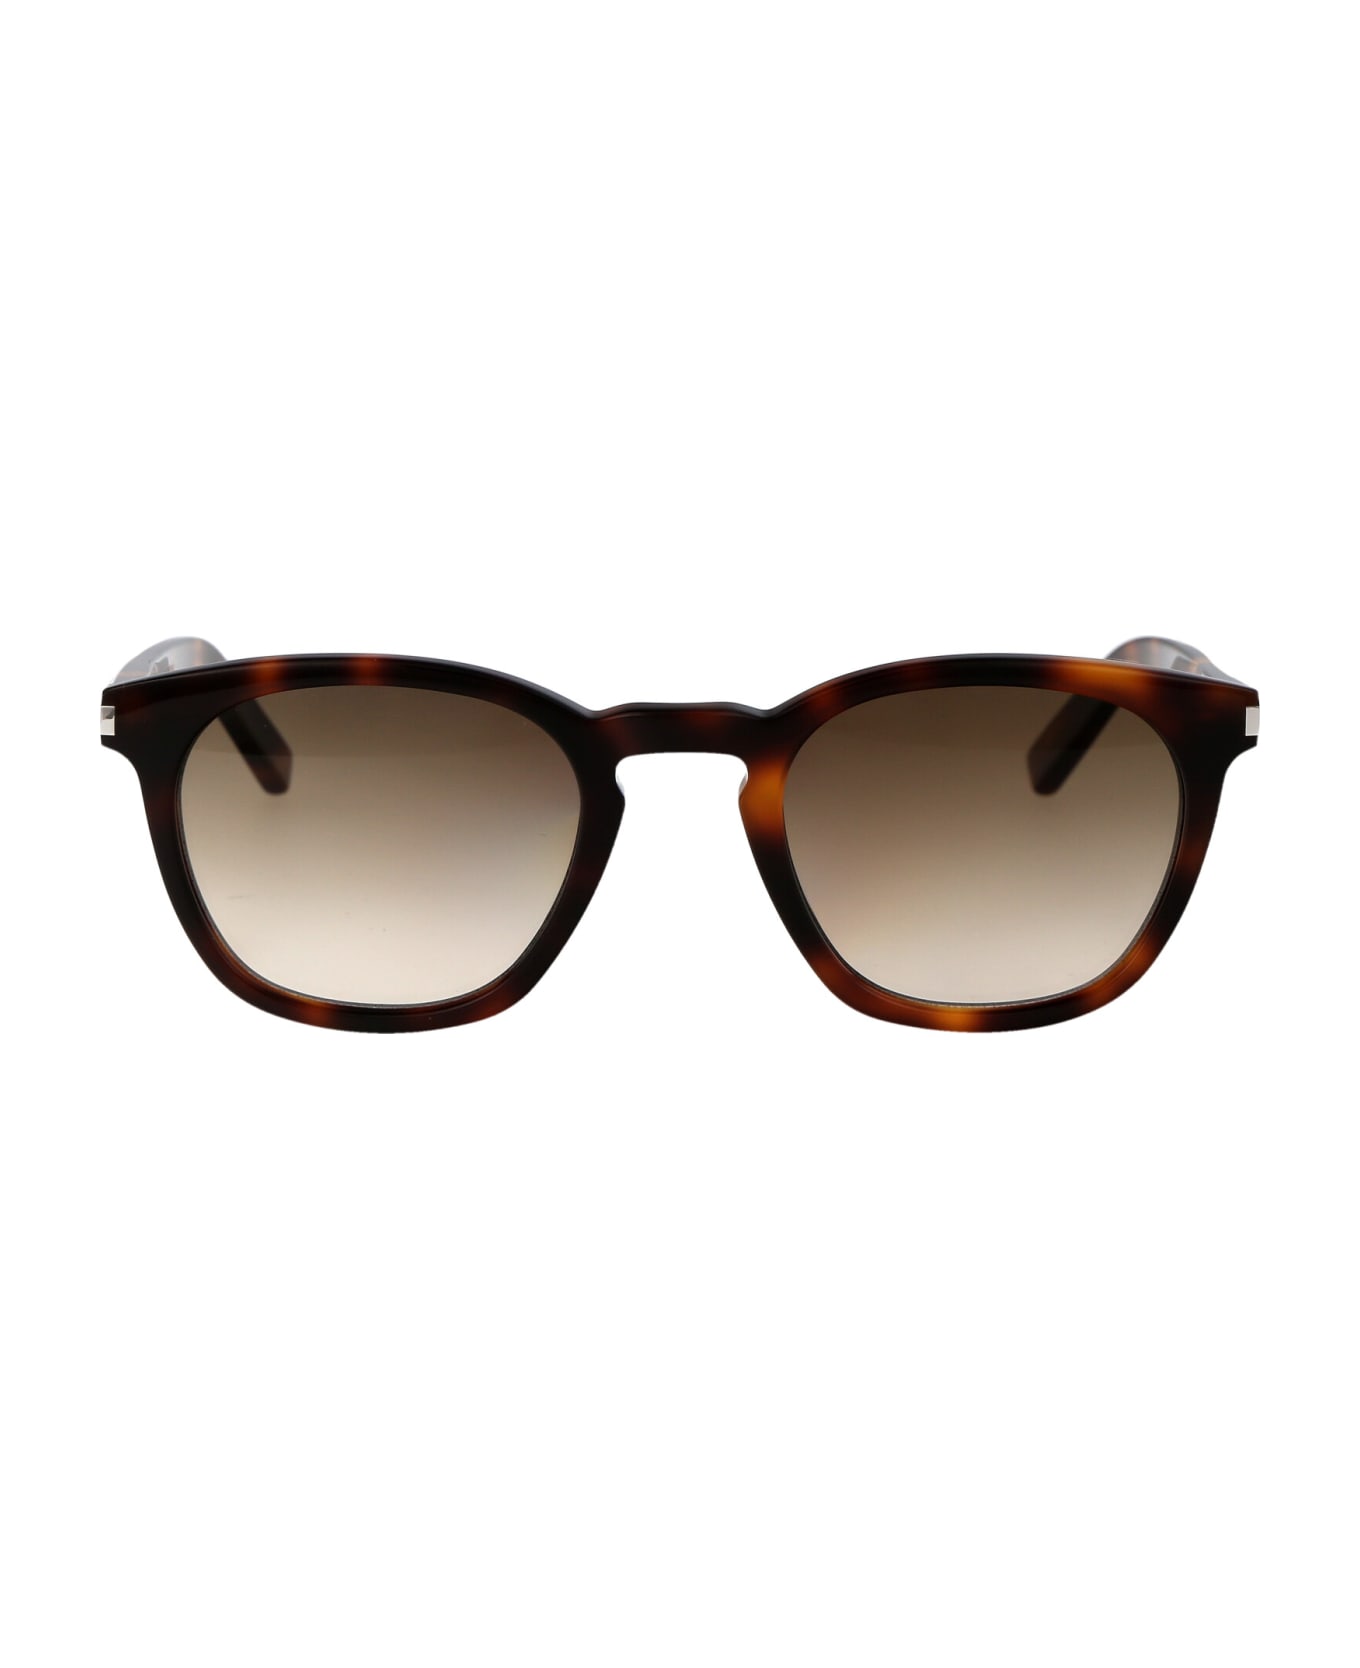 Saint Laurent Eyewear Sl 28 Sunglasses - 048 HAVANA HAVANA BROWN